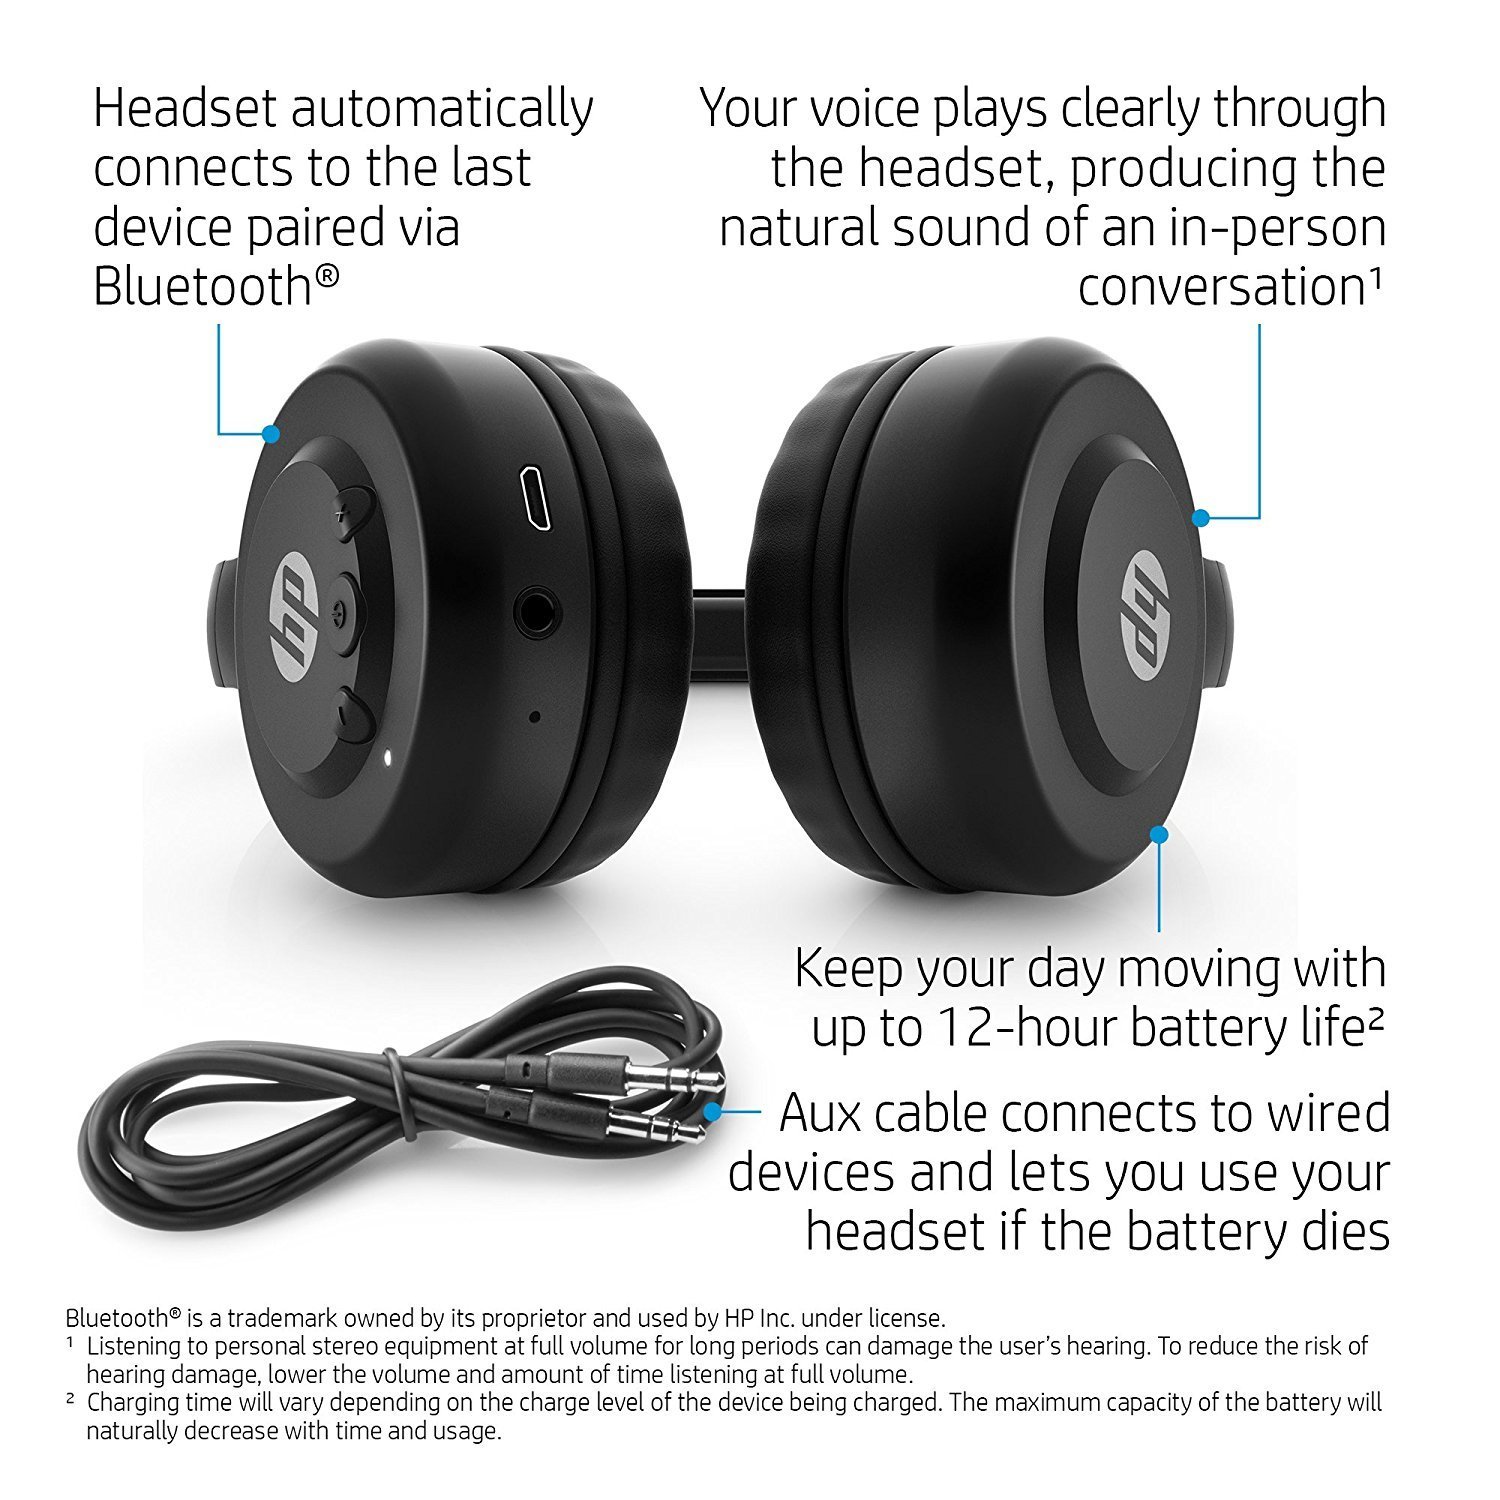 HP 600 Bluetooth Headset, Black, 1SH06AA, Rs.2947